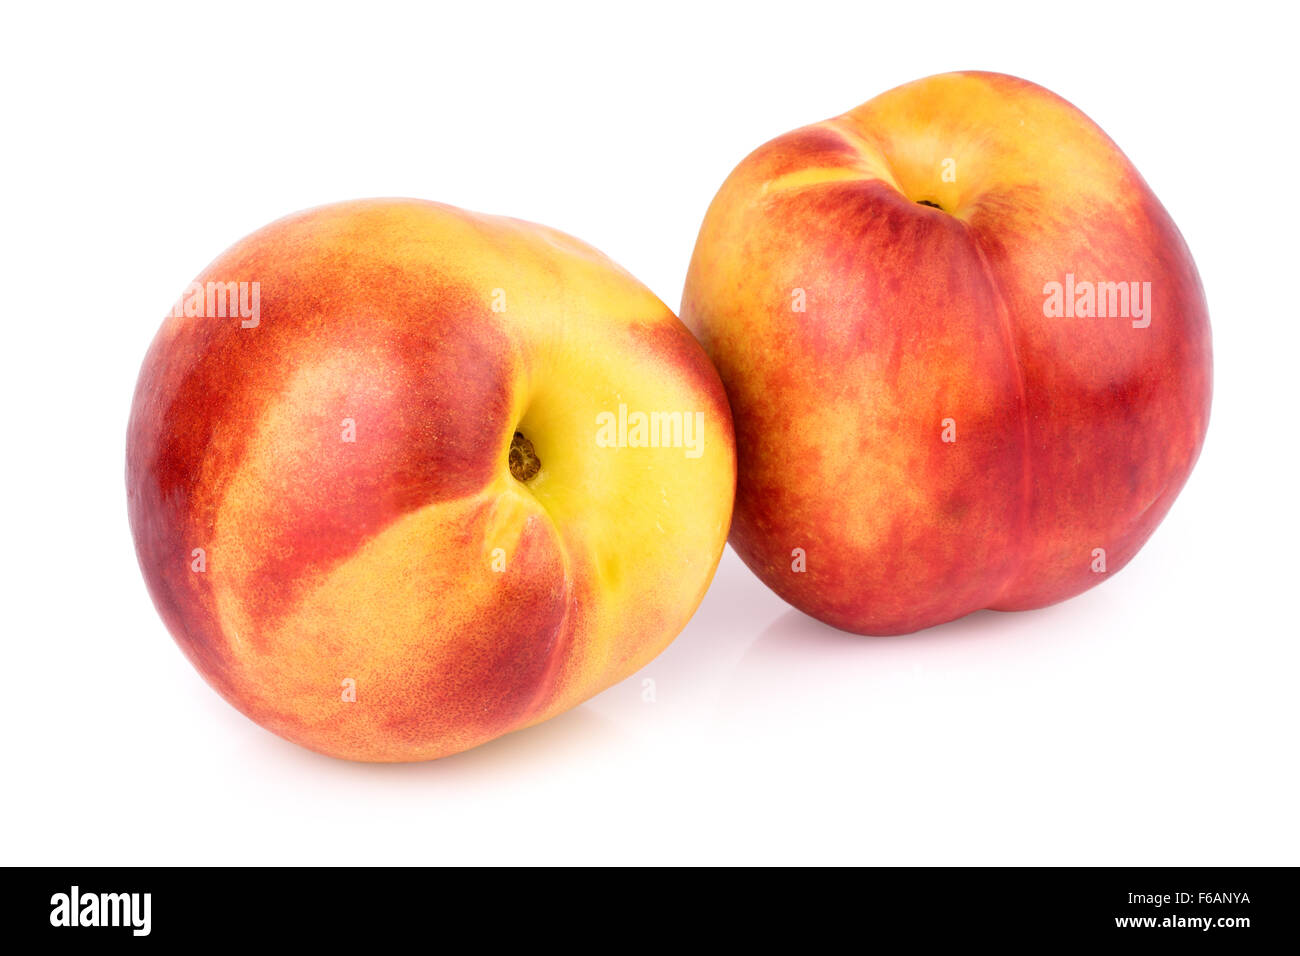 Peach Nectarine Isolated on White Stock Photo